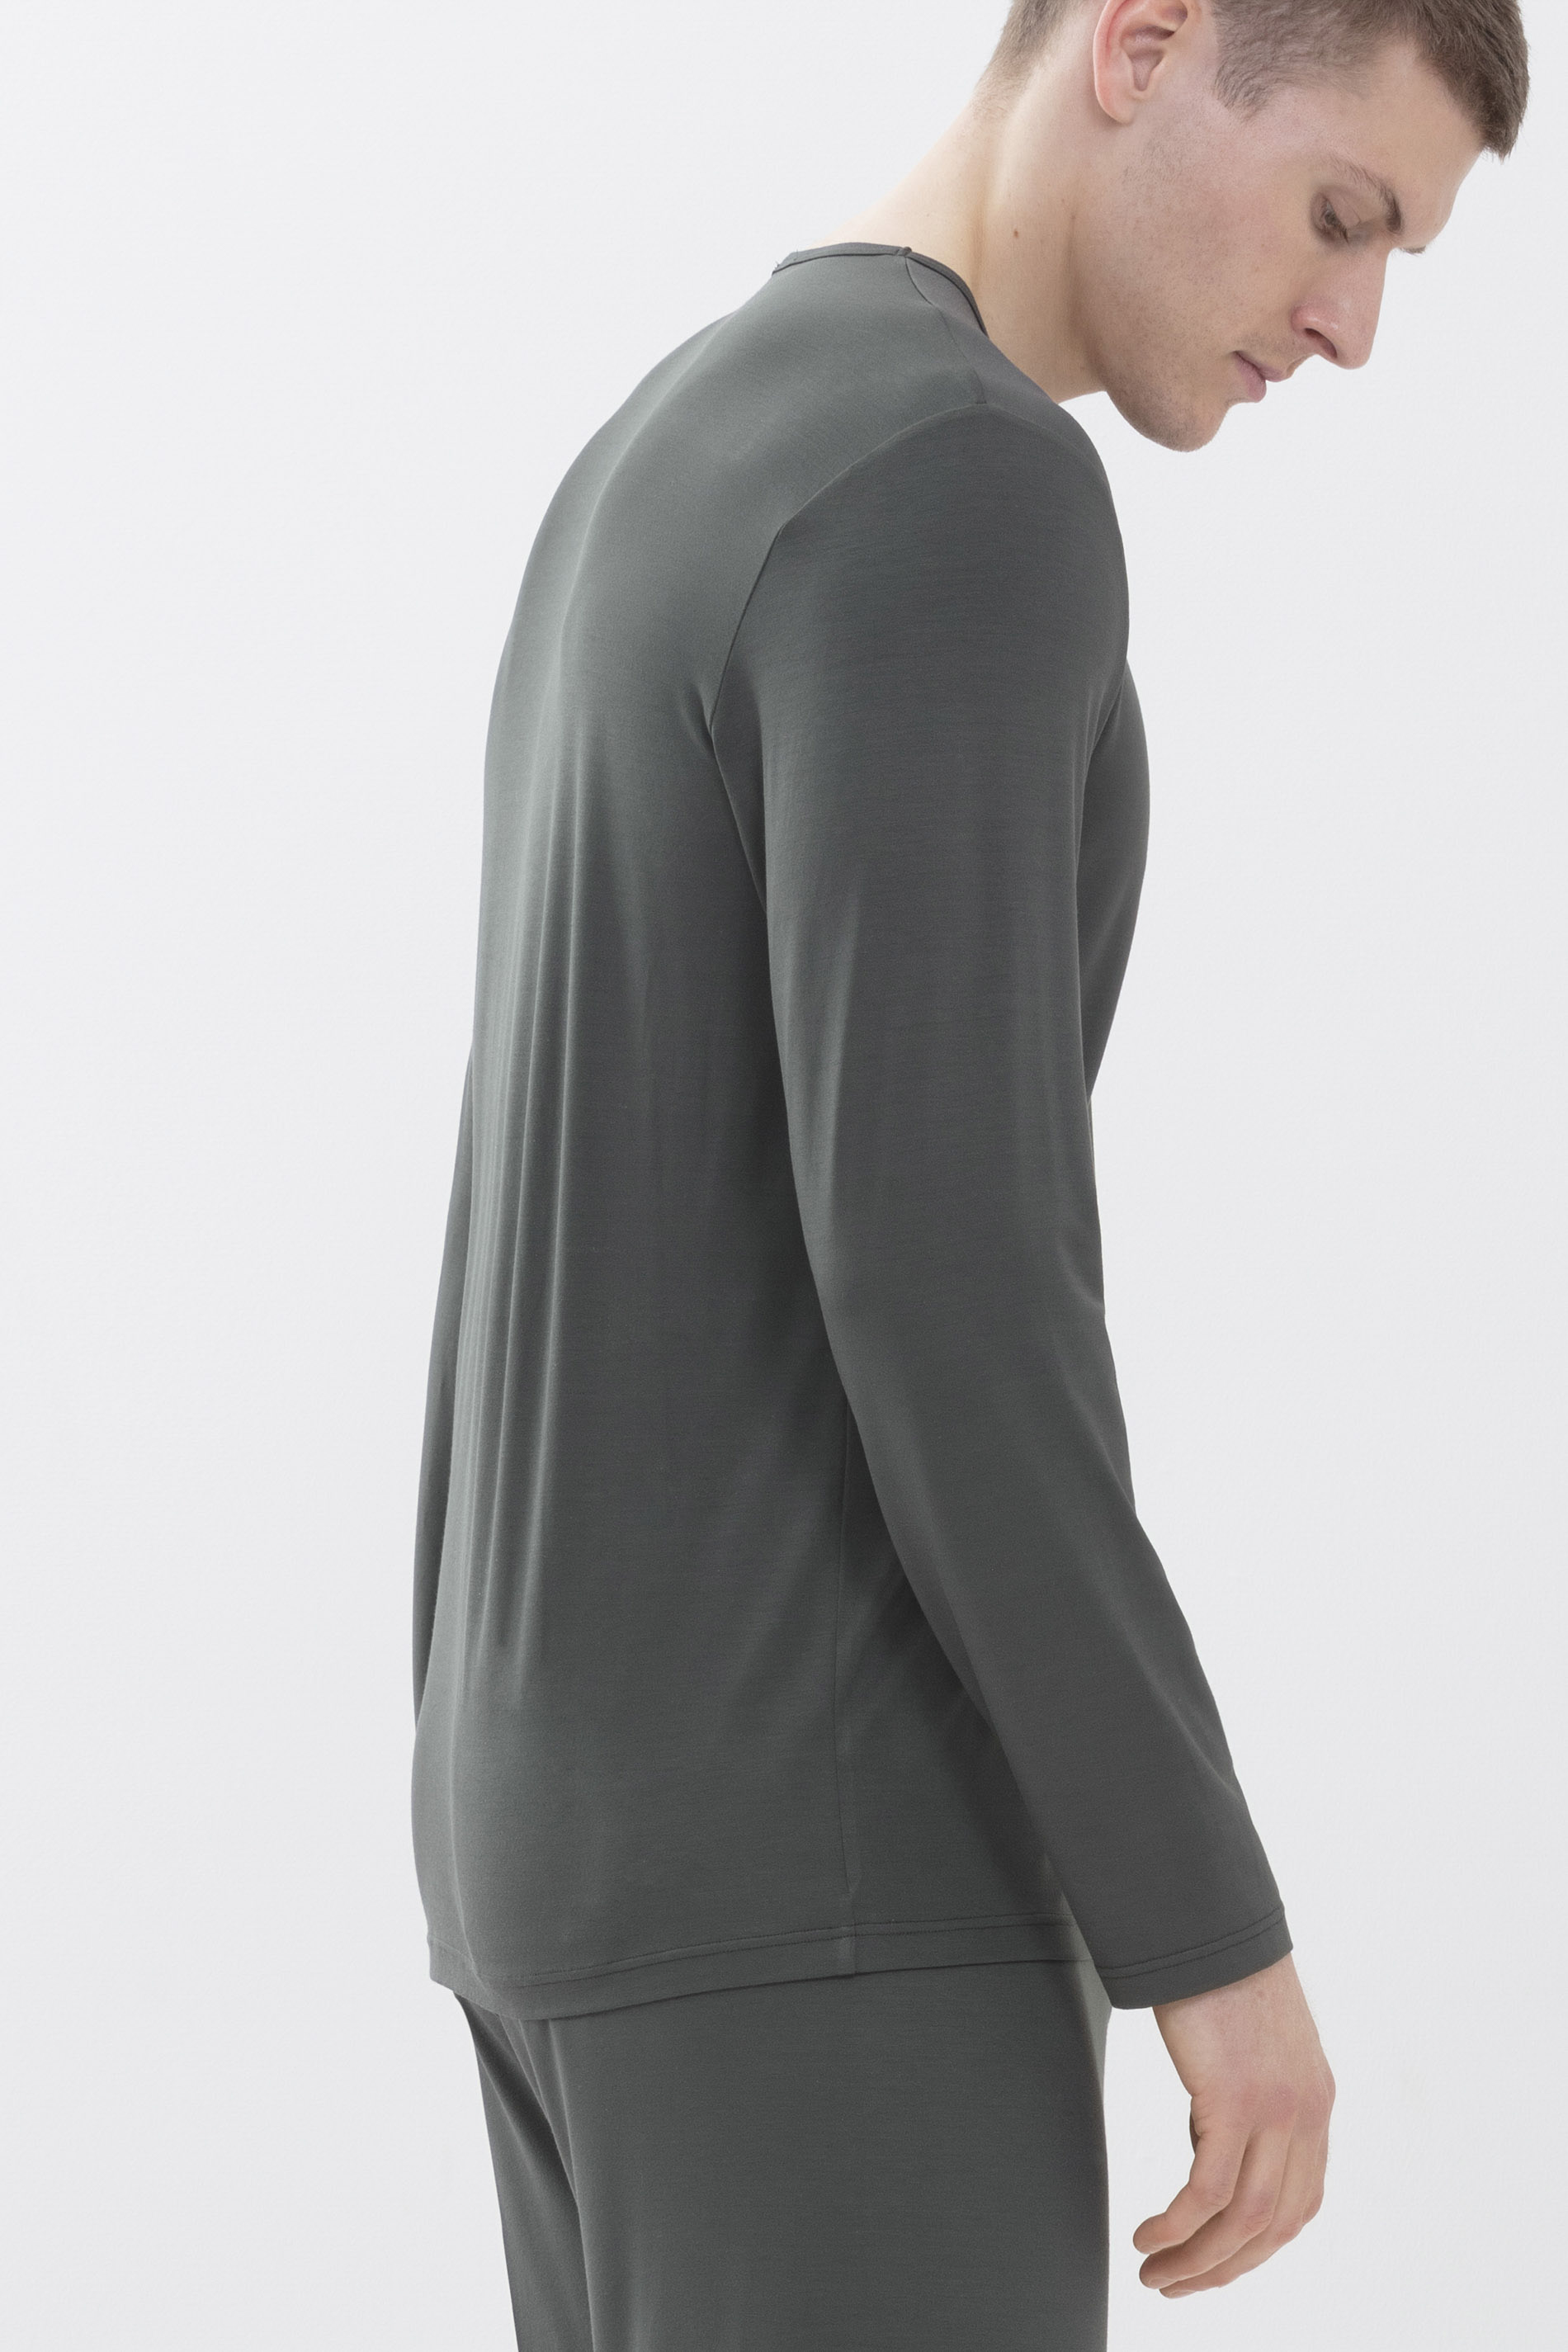 Langarm-Shirt Stormy Grey Serie Jefferson Modal Detailansicht 02 | mey®